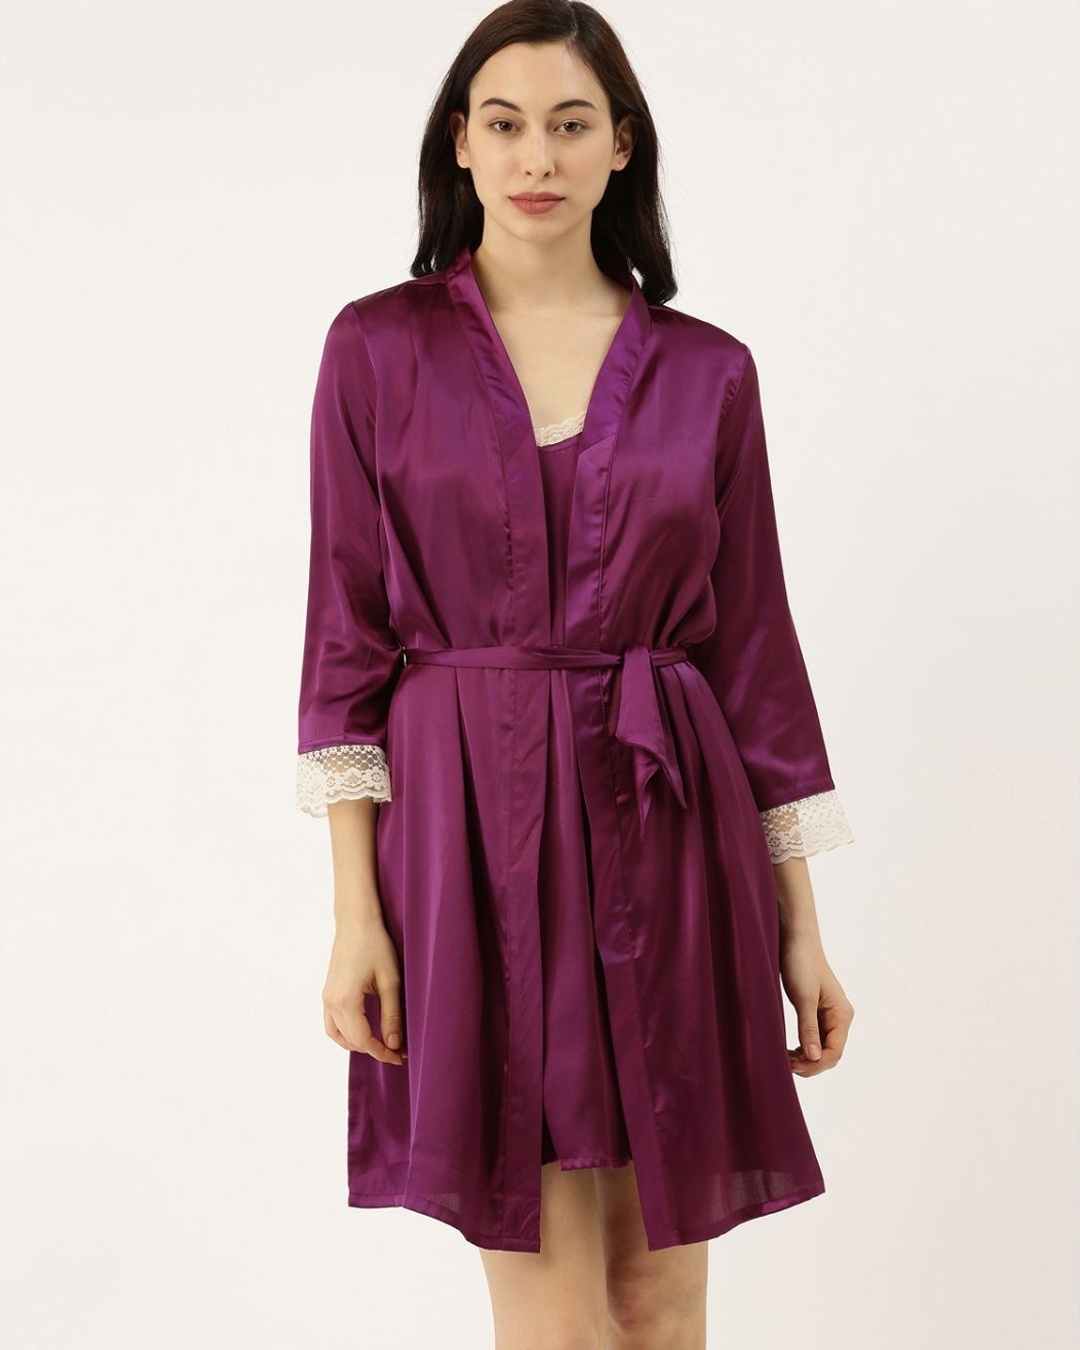 Summer Loungewear Set For Women Kimono Nighty & Robe With Rayon Split Satin  Nightdress And Robe And Lingerie From Qackwang, $22.99 | DHgate.Com